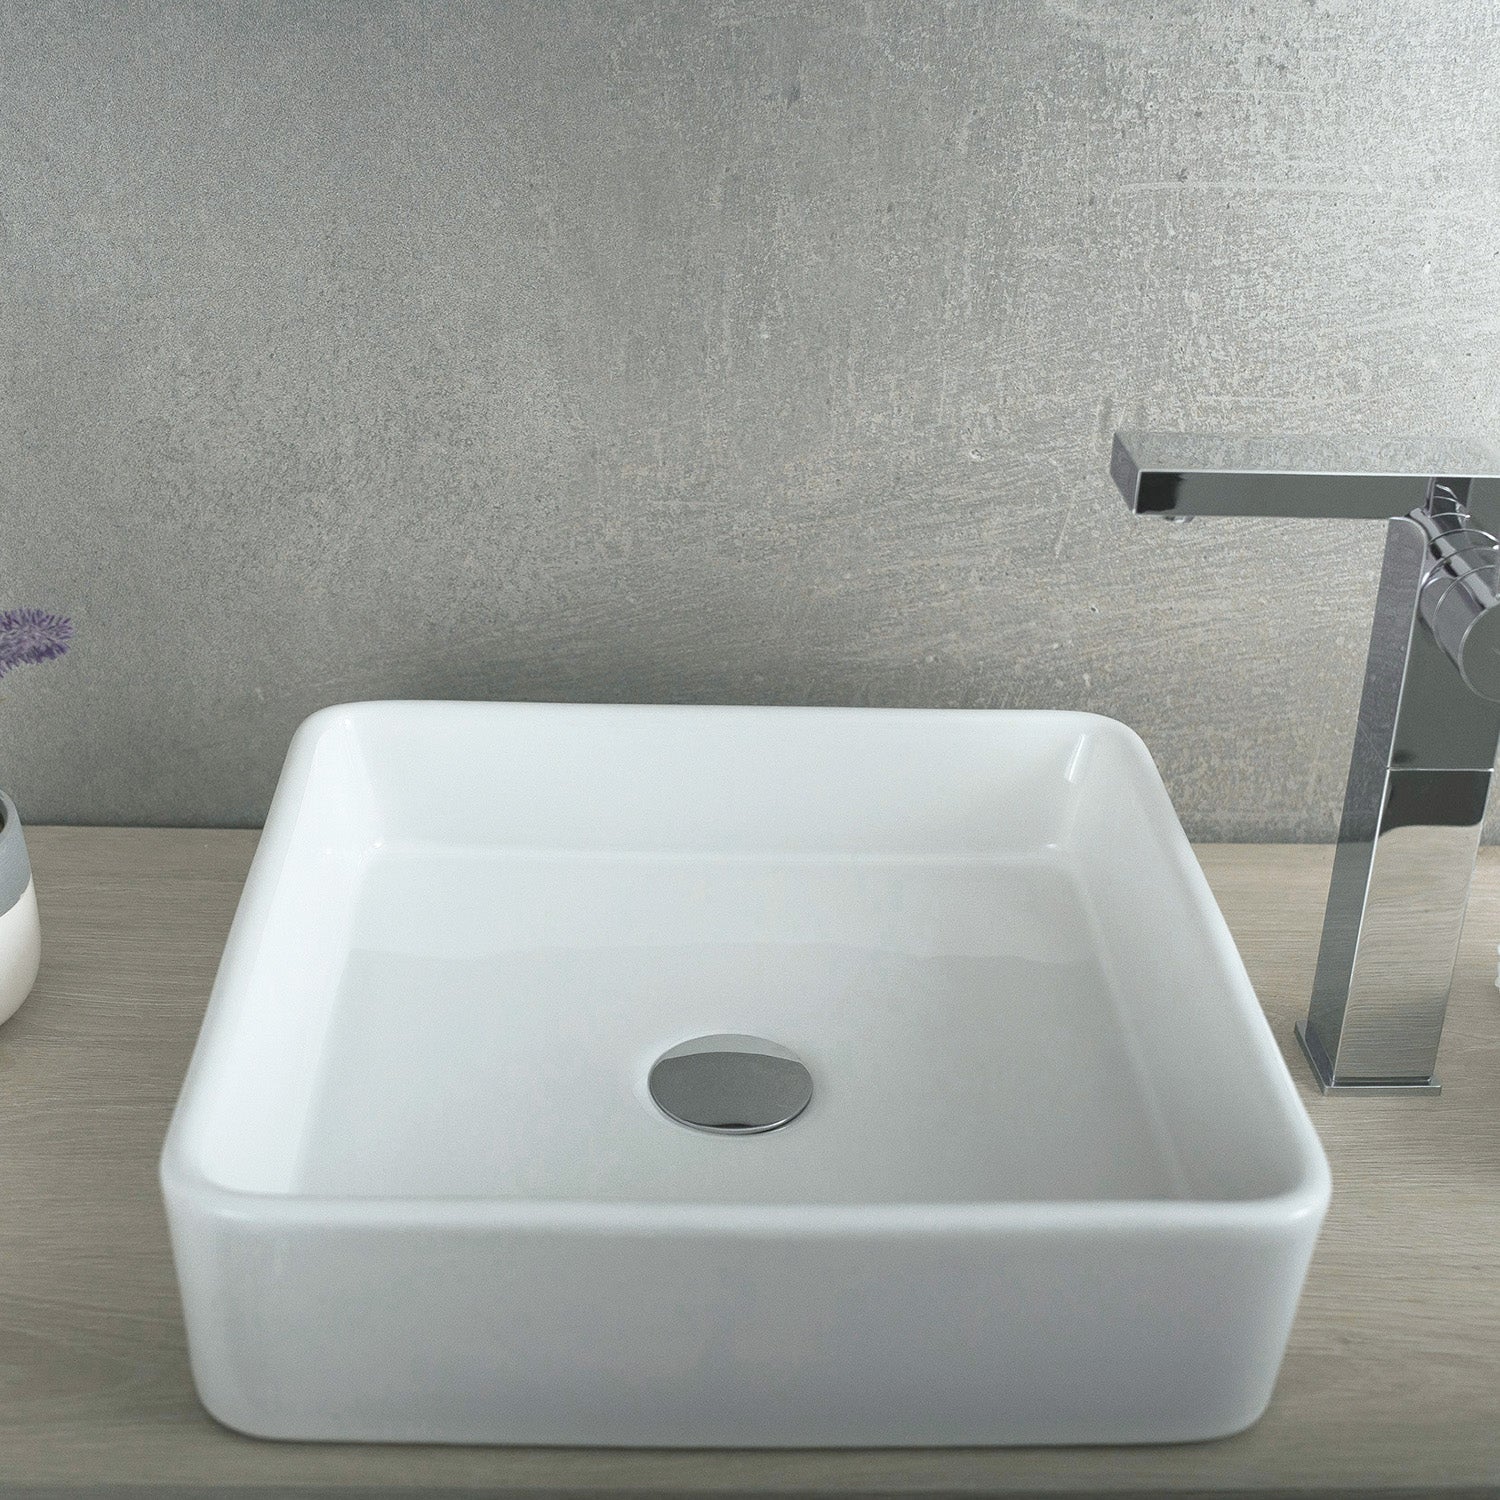 DAX Ceramic Square Single Bowl Bathroom Vessel Sink, White Finish, 15-5/16 x 15-5/16 x 2-5/16 Inches (BSN-285C)